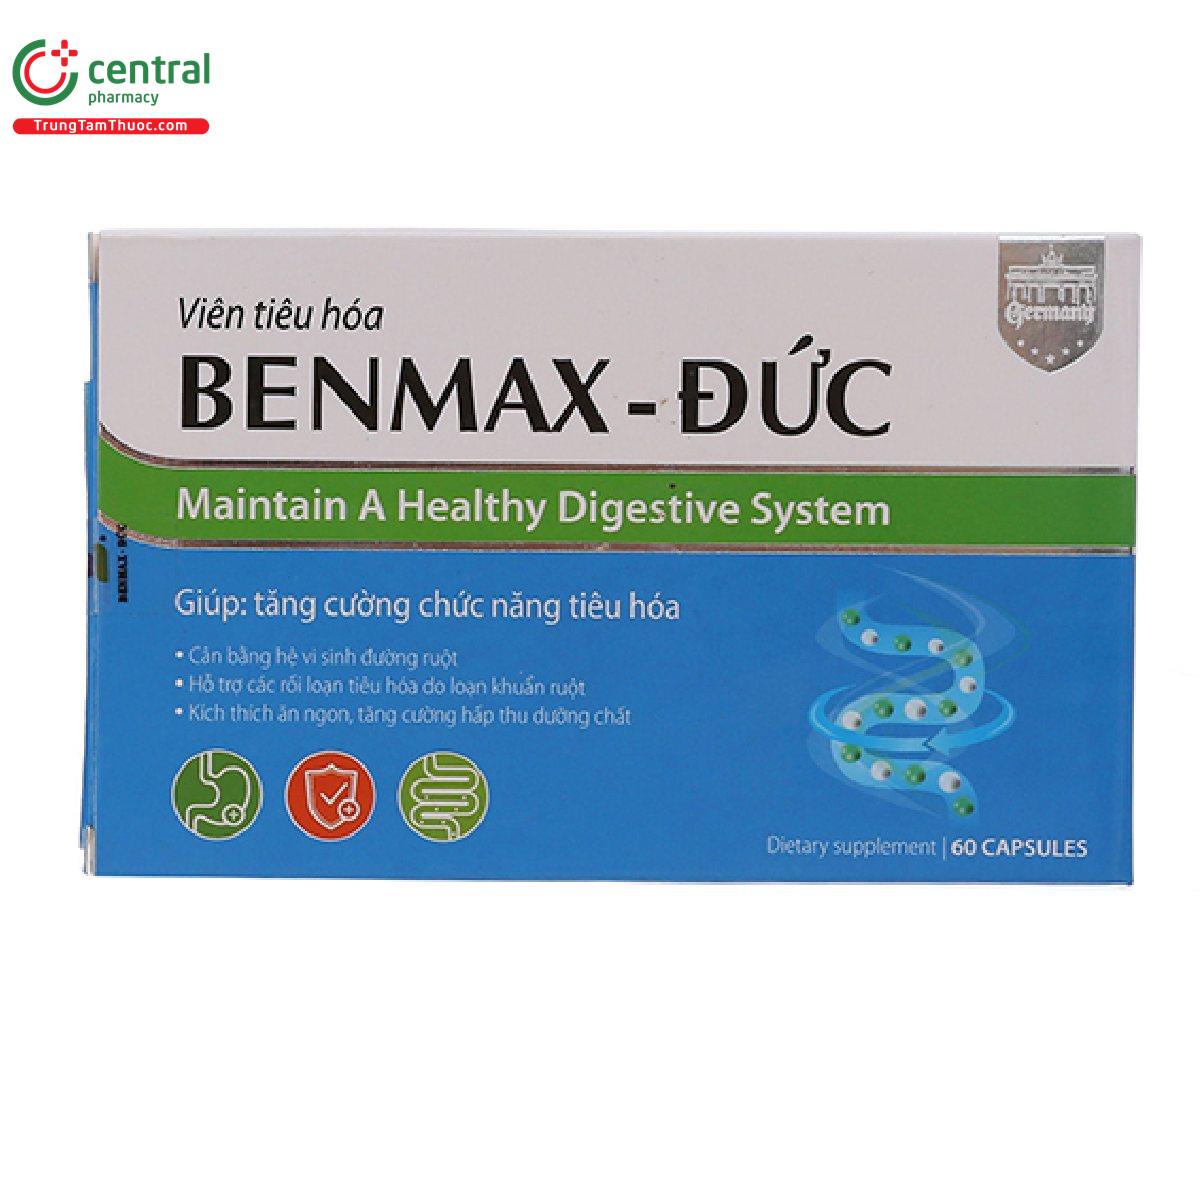 benmax duc 2 M5825